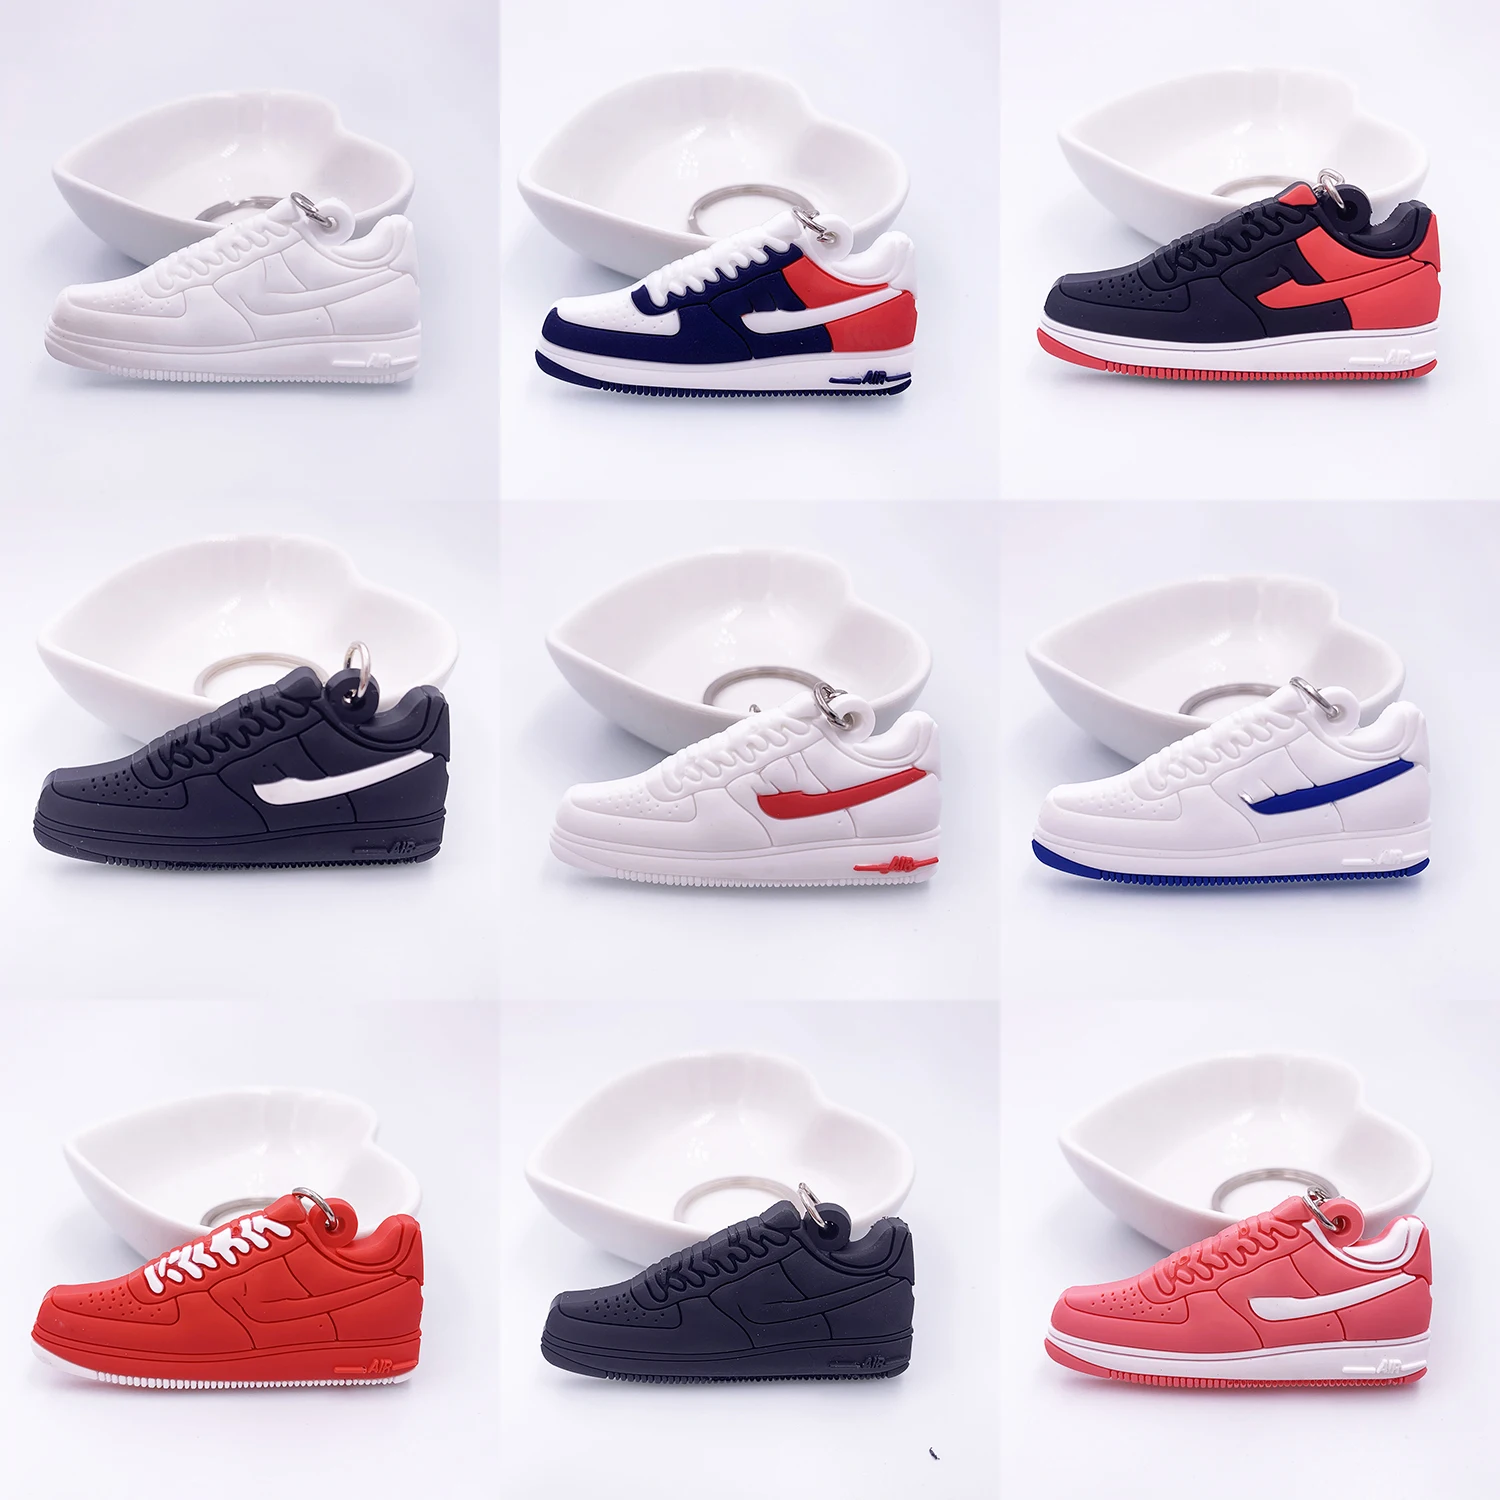 Мини Jordan Air Force 1 брелок обуви Для мужчин Для женщин дети, брелок в подарок AJ Баскетбол Брелок-кроссовок для ключей ключ держатель Porte Clef